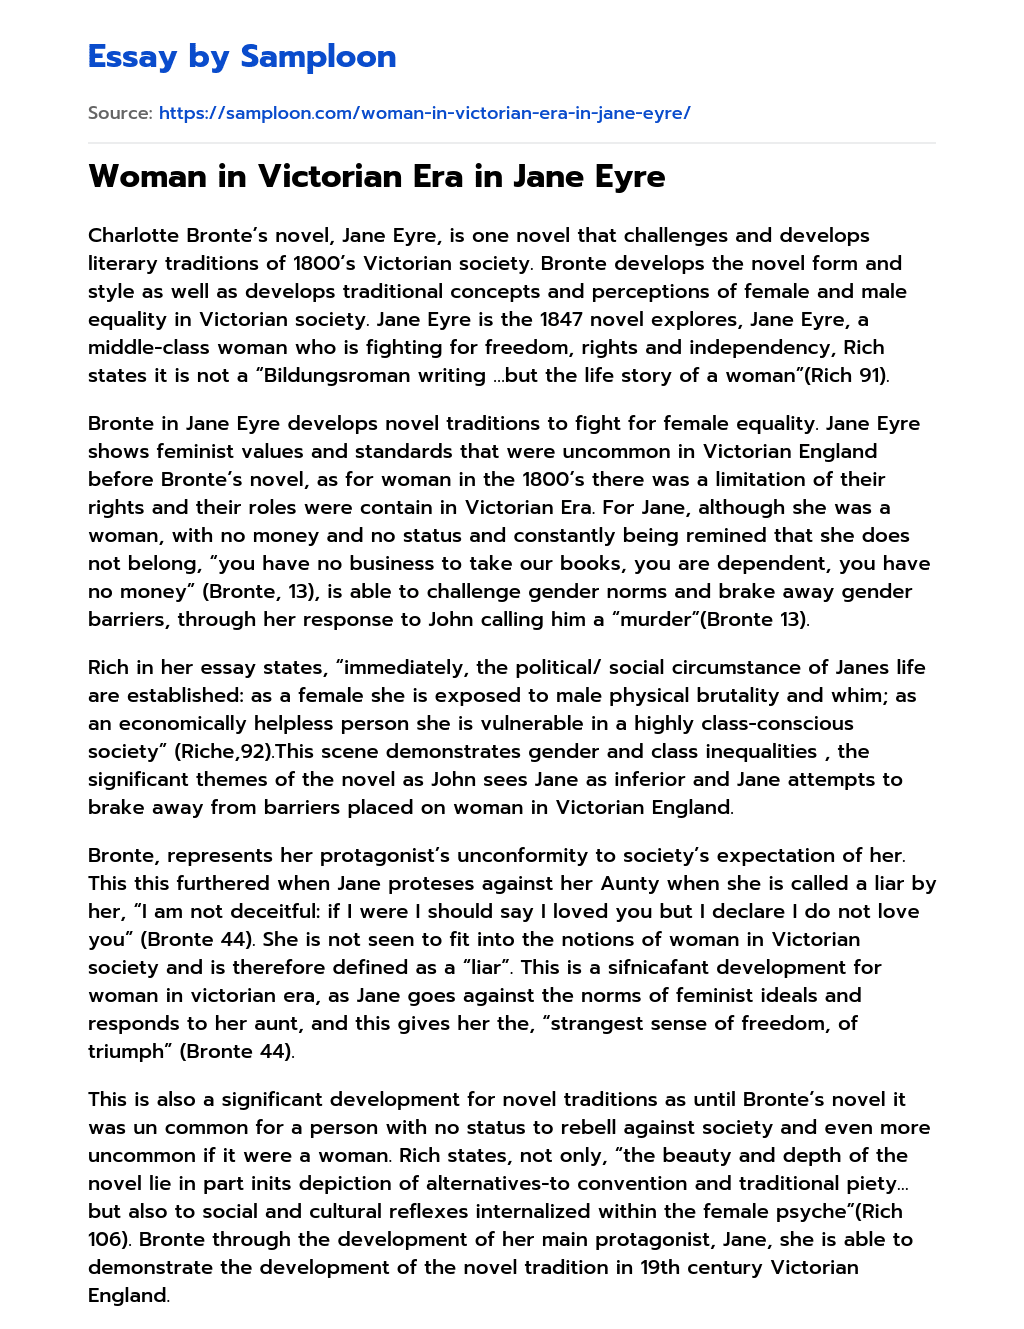 Woman in Victorian Era in Jane Eyre essay